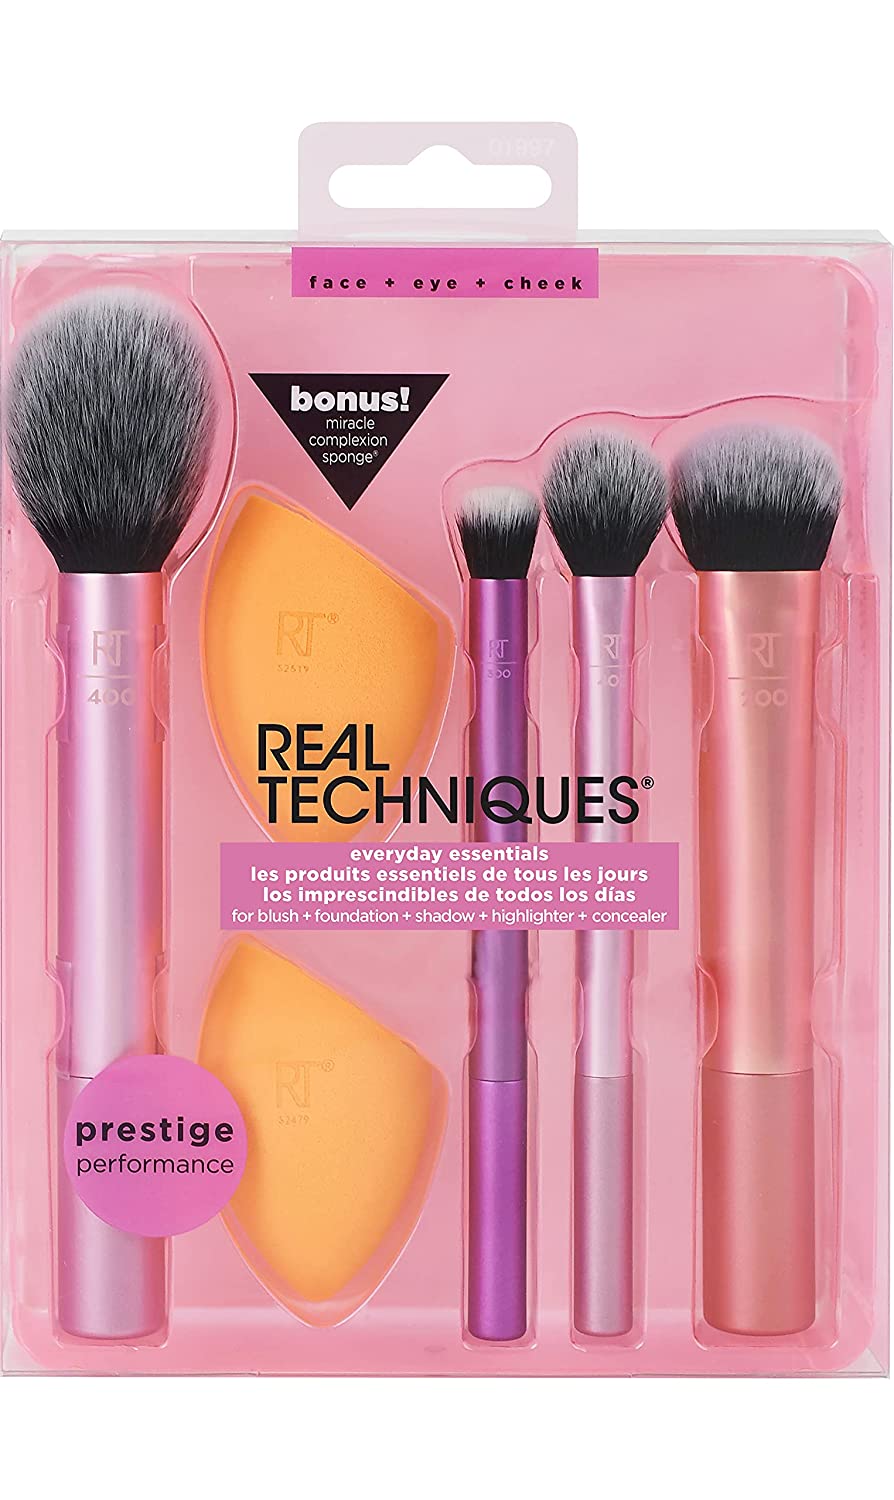 Real Techniques Makeup Brush Set with 2 Sponge Blenders